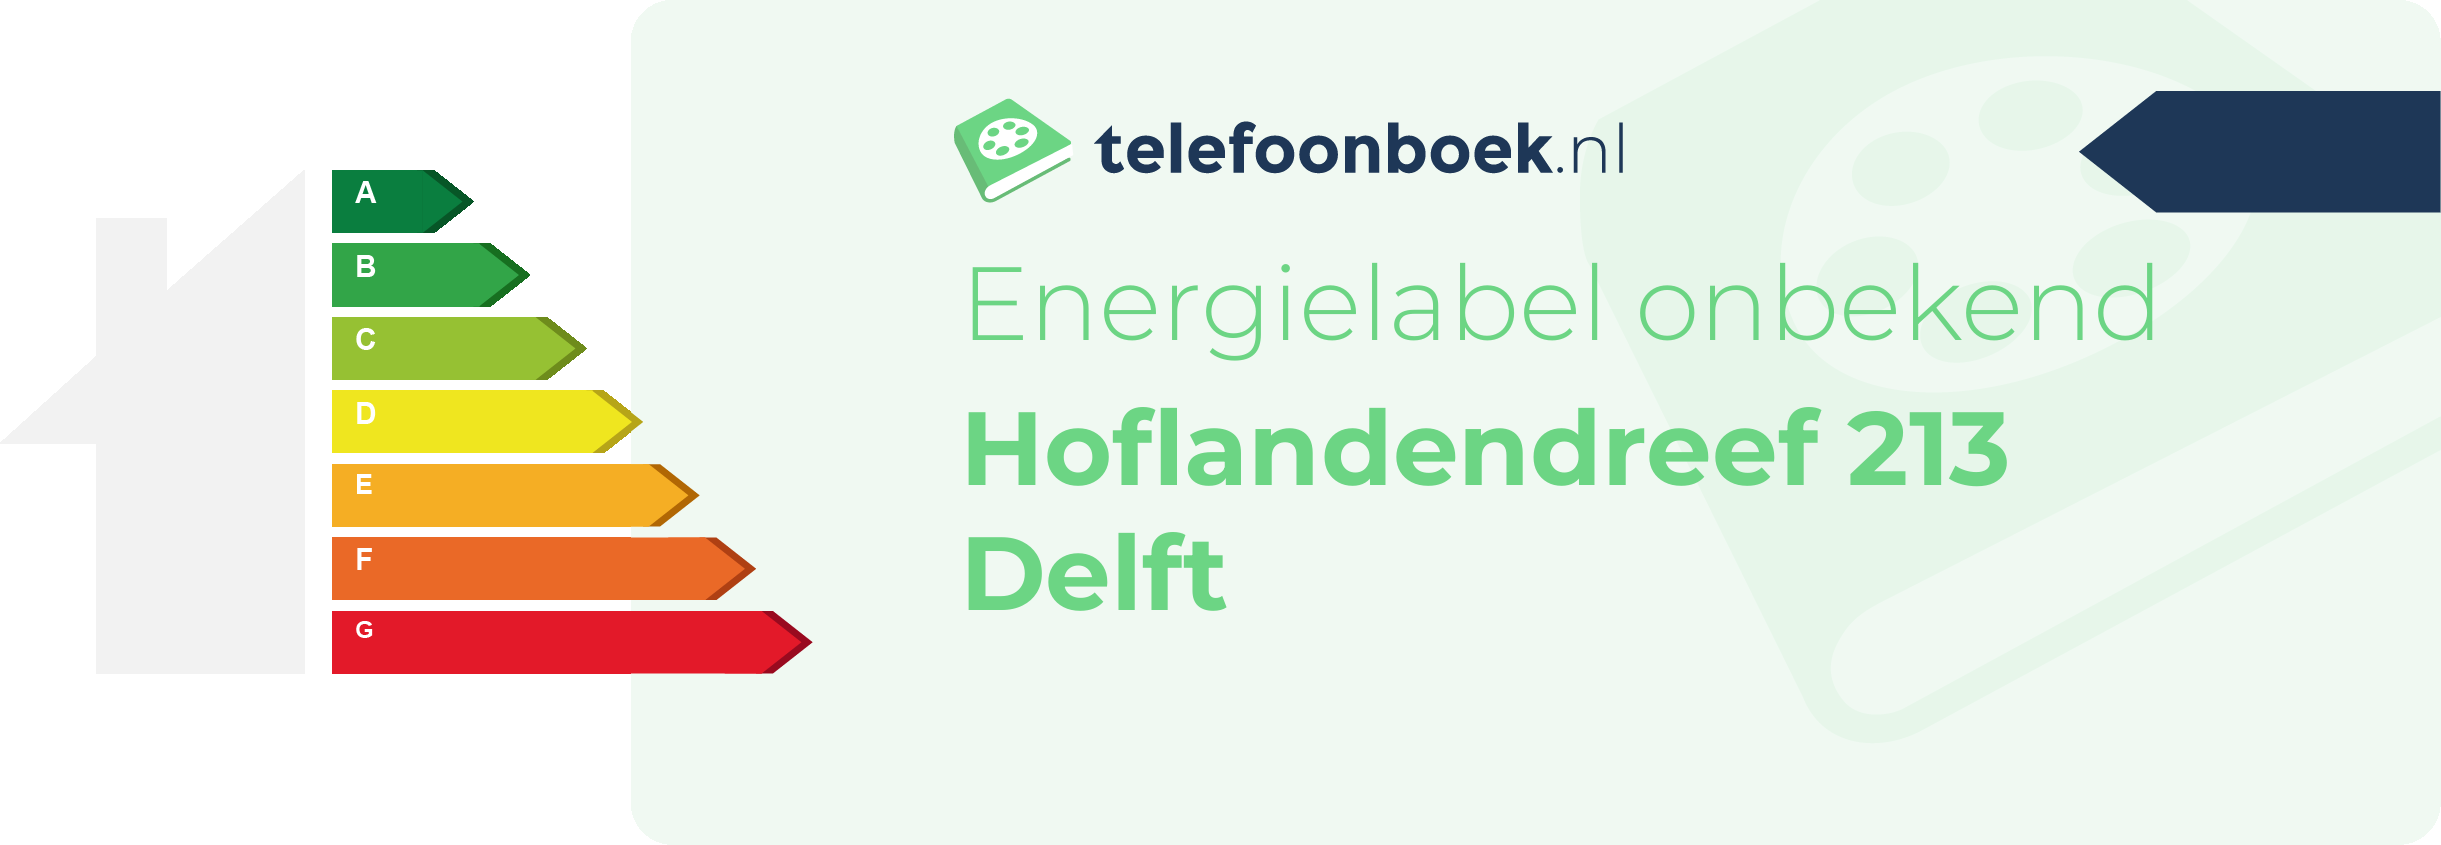 Energielabel Hoflandendreef 213 Delft